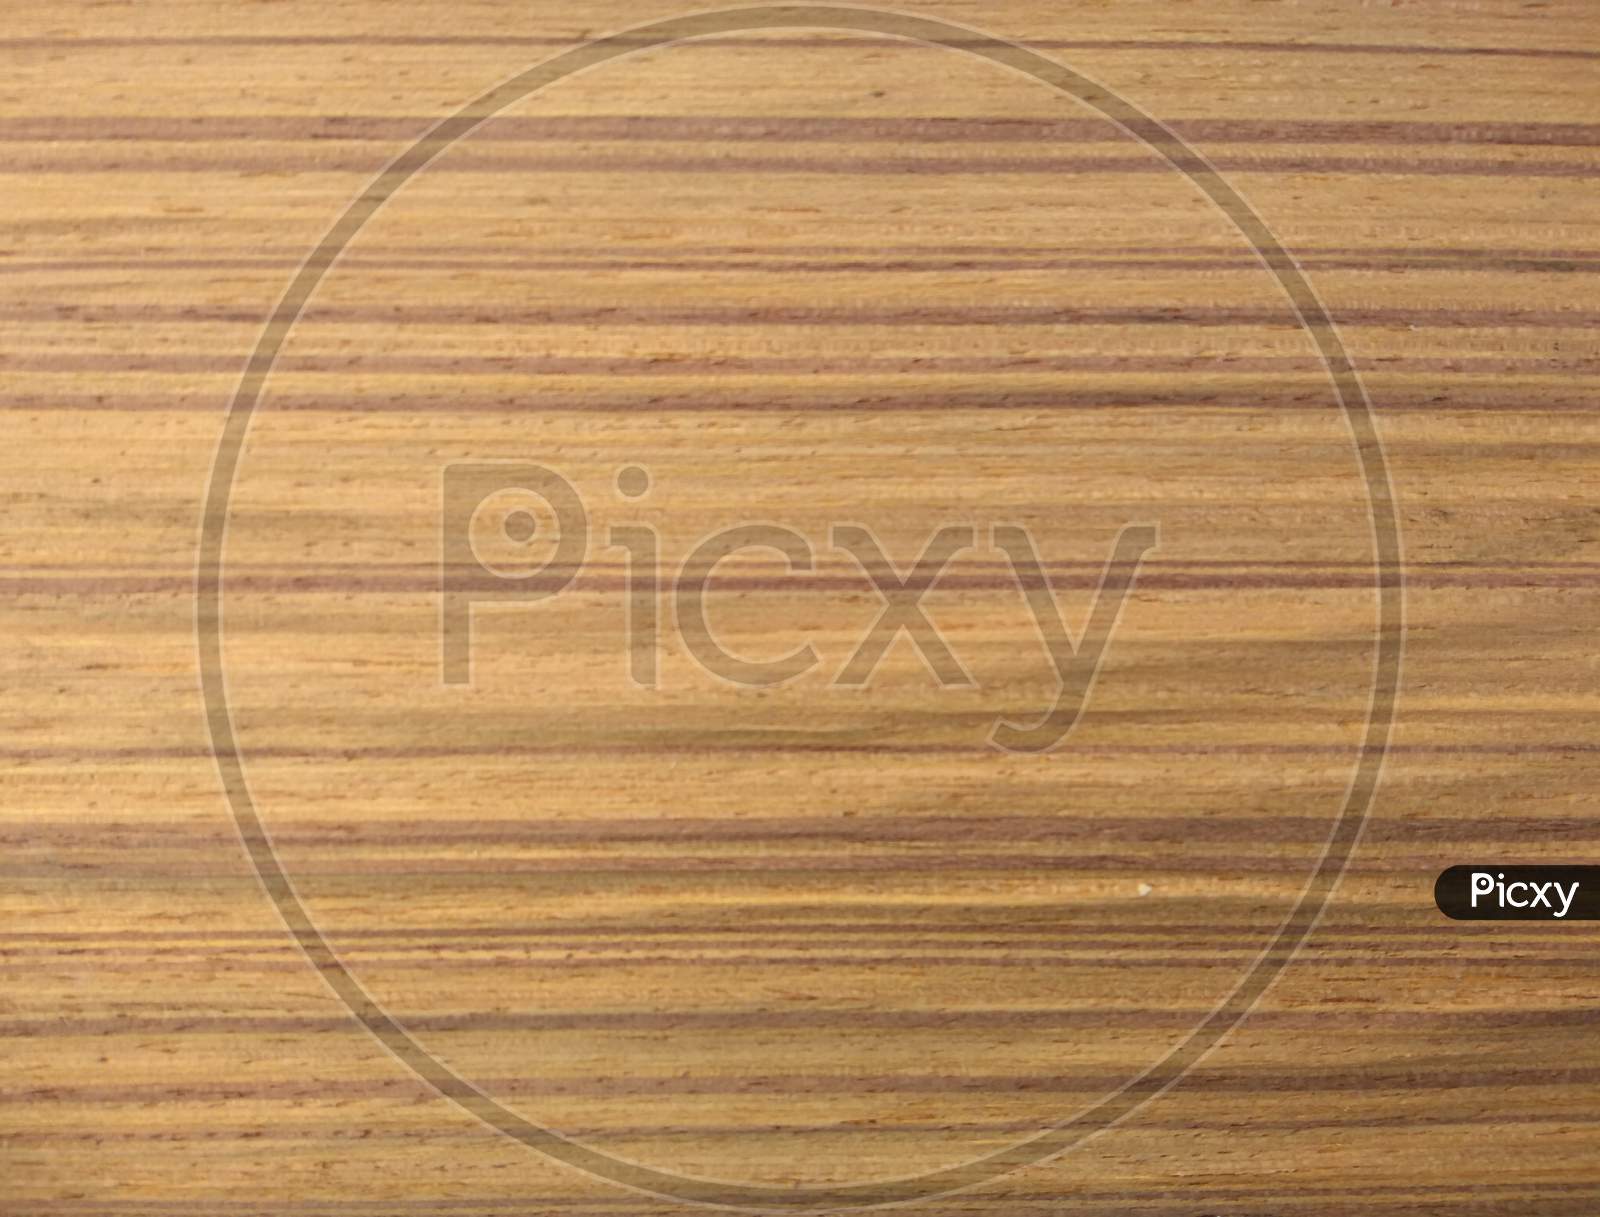 Natural Burma Teak Wood Texture Background. Burma Teak Veneer Surface For Interior And Exterior Manufacturers Use.